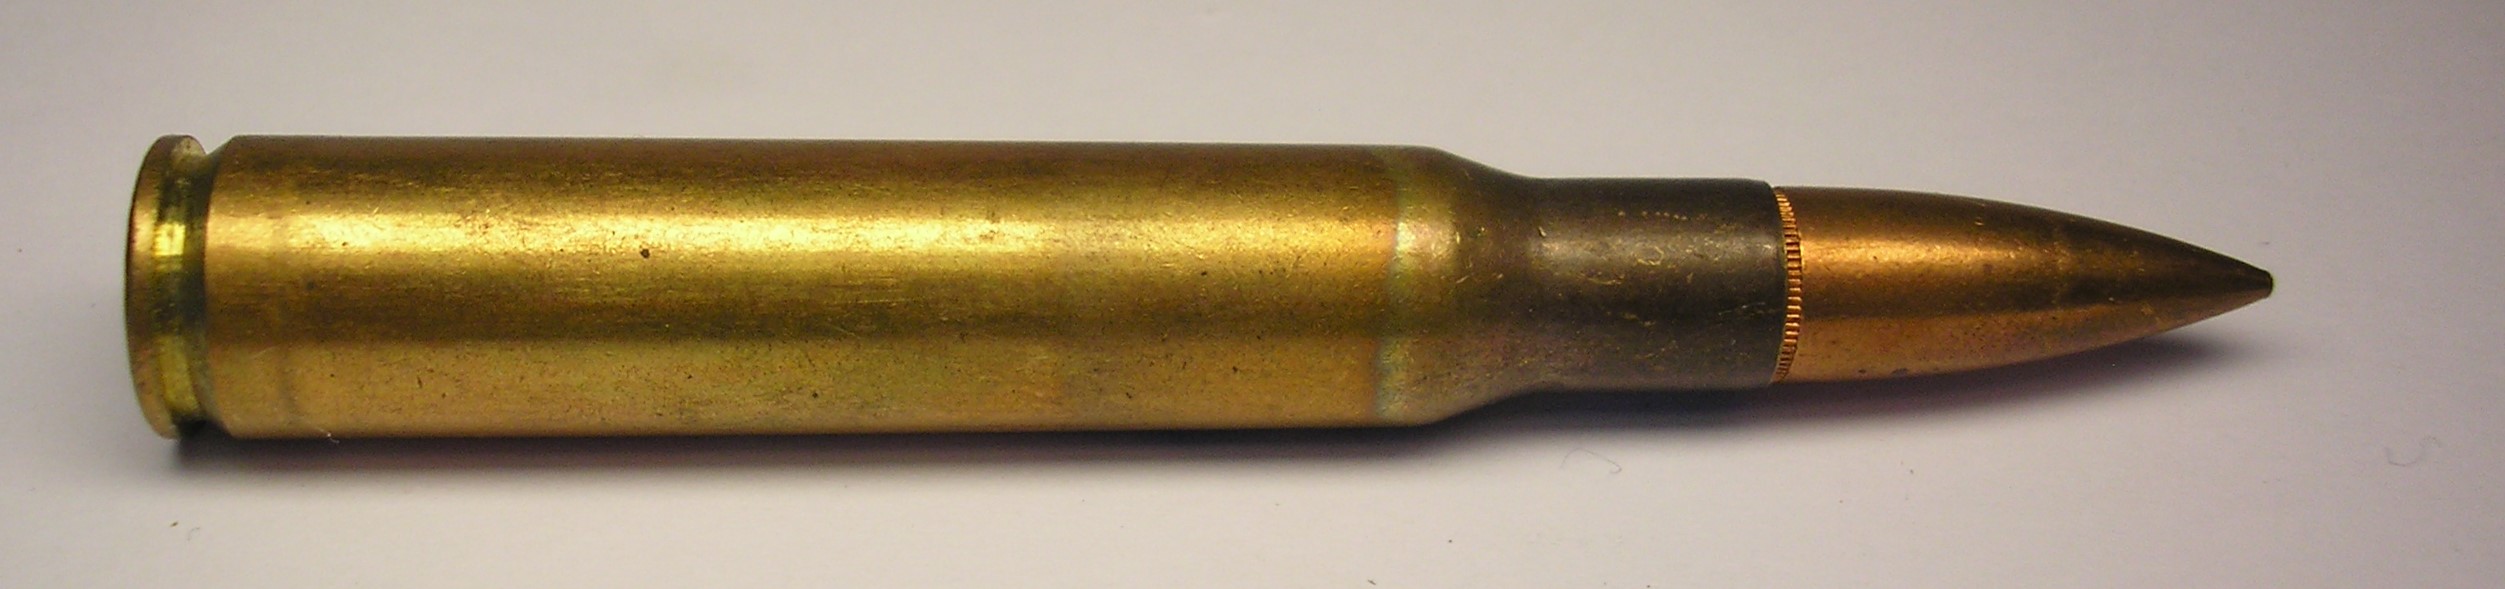 ./ammo/762x63/patroner/Patron-762x63-RA-helmantel-M52-1953-1.JPG